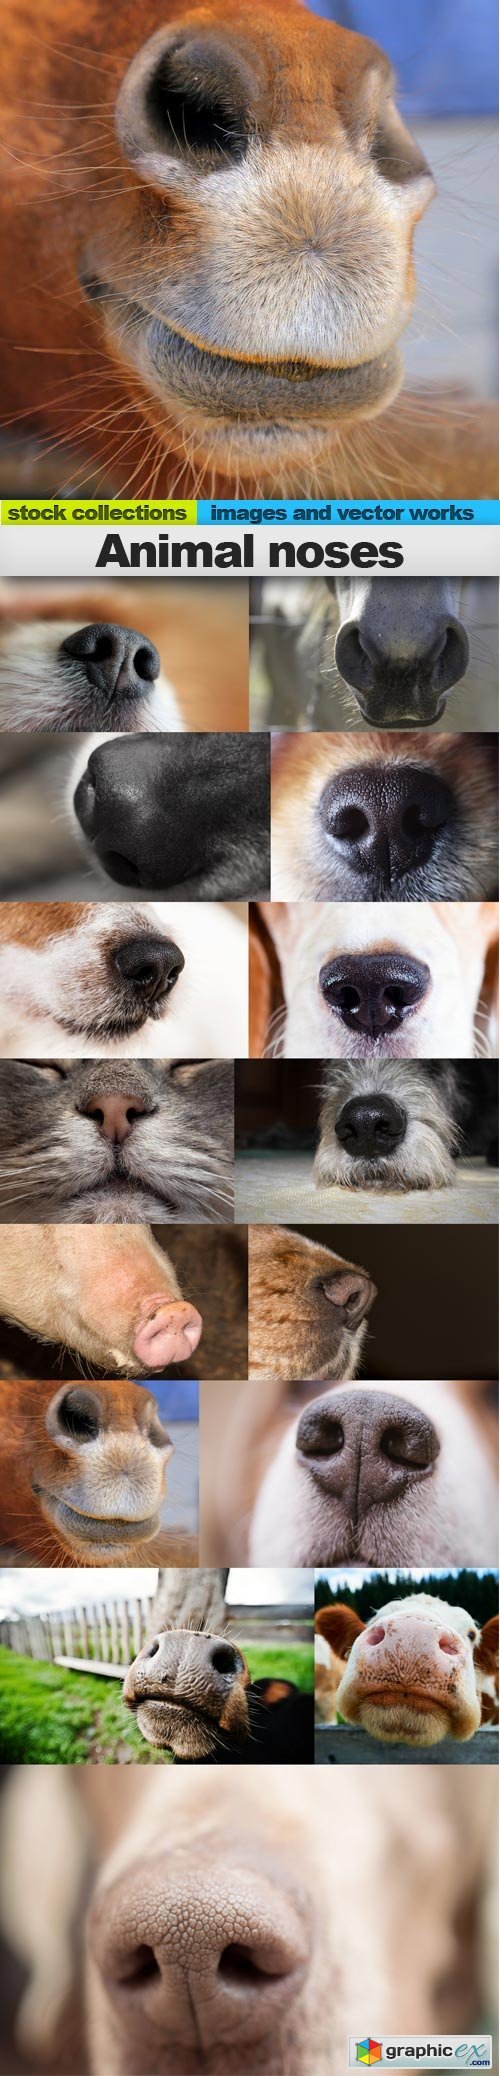 Animal noses, 15 x UHQ JPEG